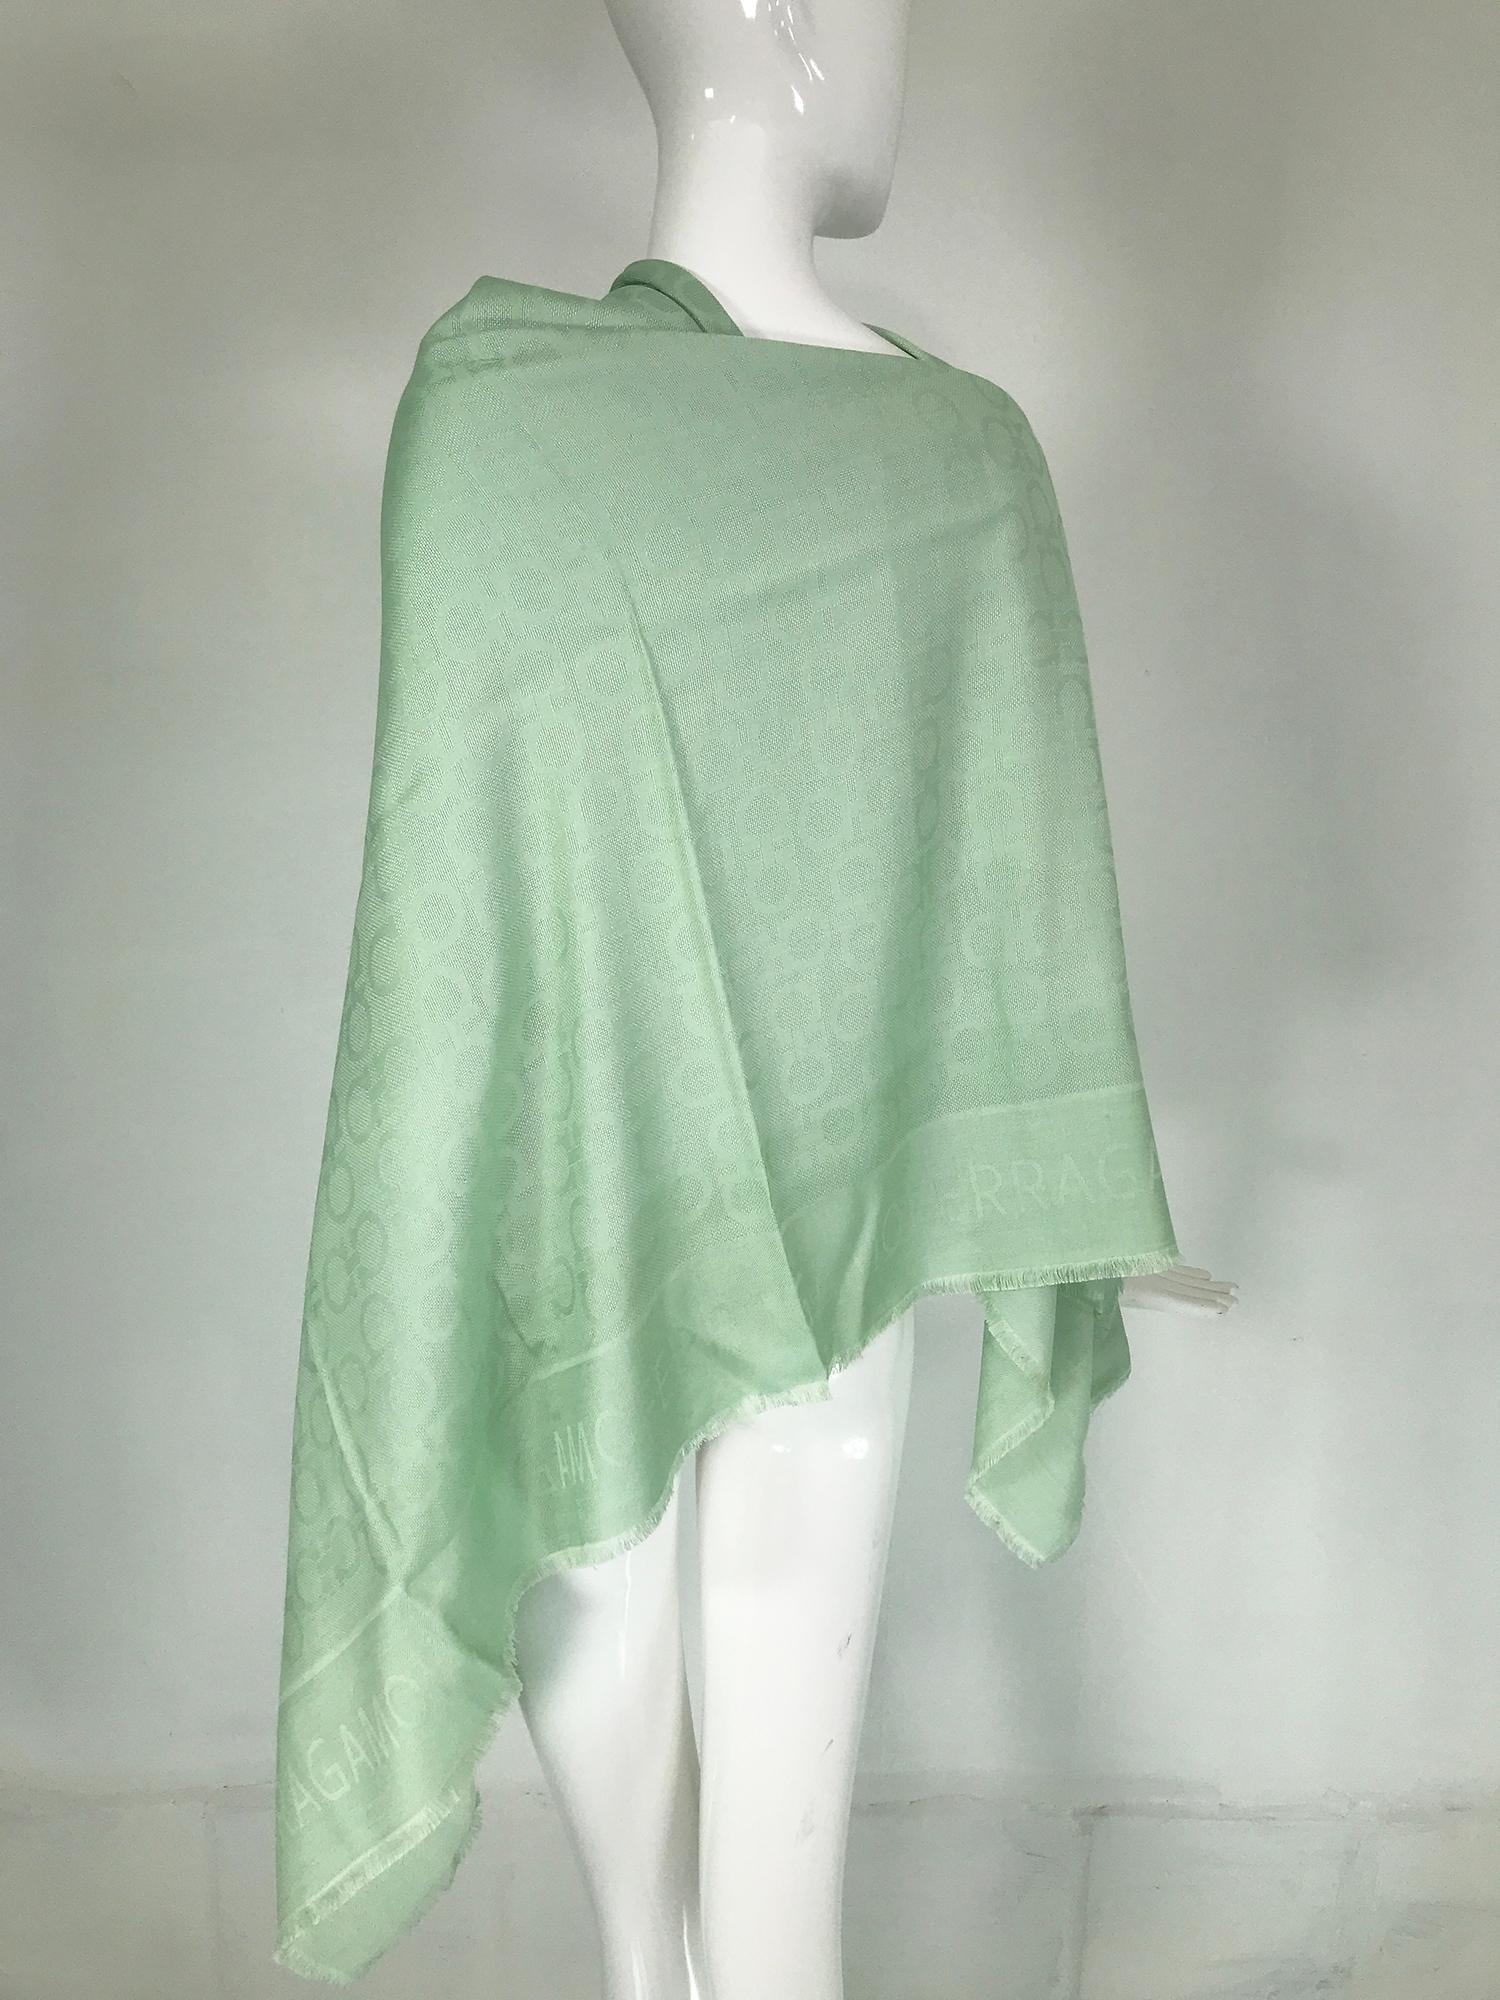 Salvatore Ferragamo Mint Green Silk & Wool Jacquard Shawl With Self Fringe For Sale 4